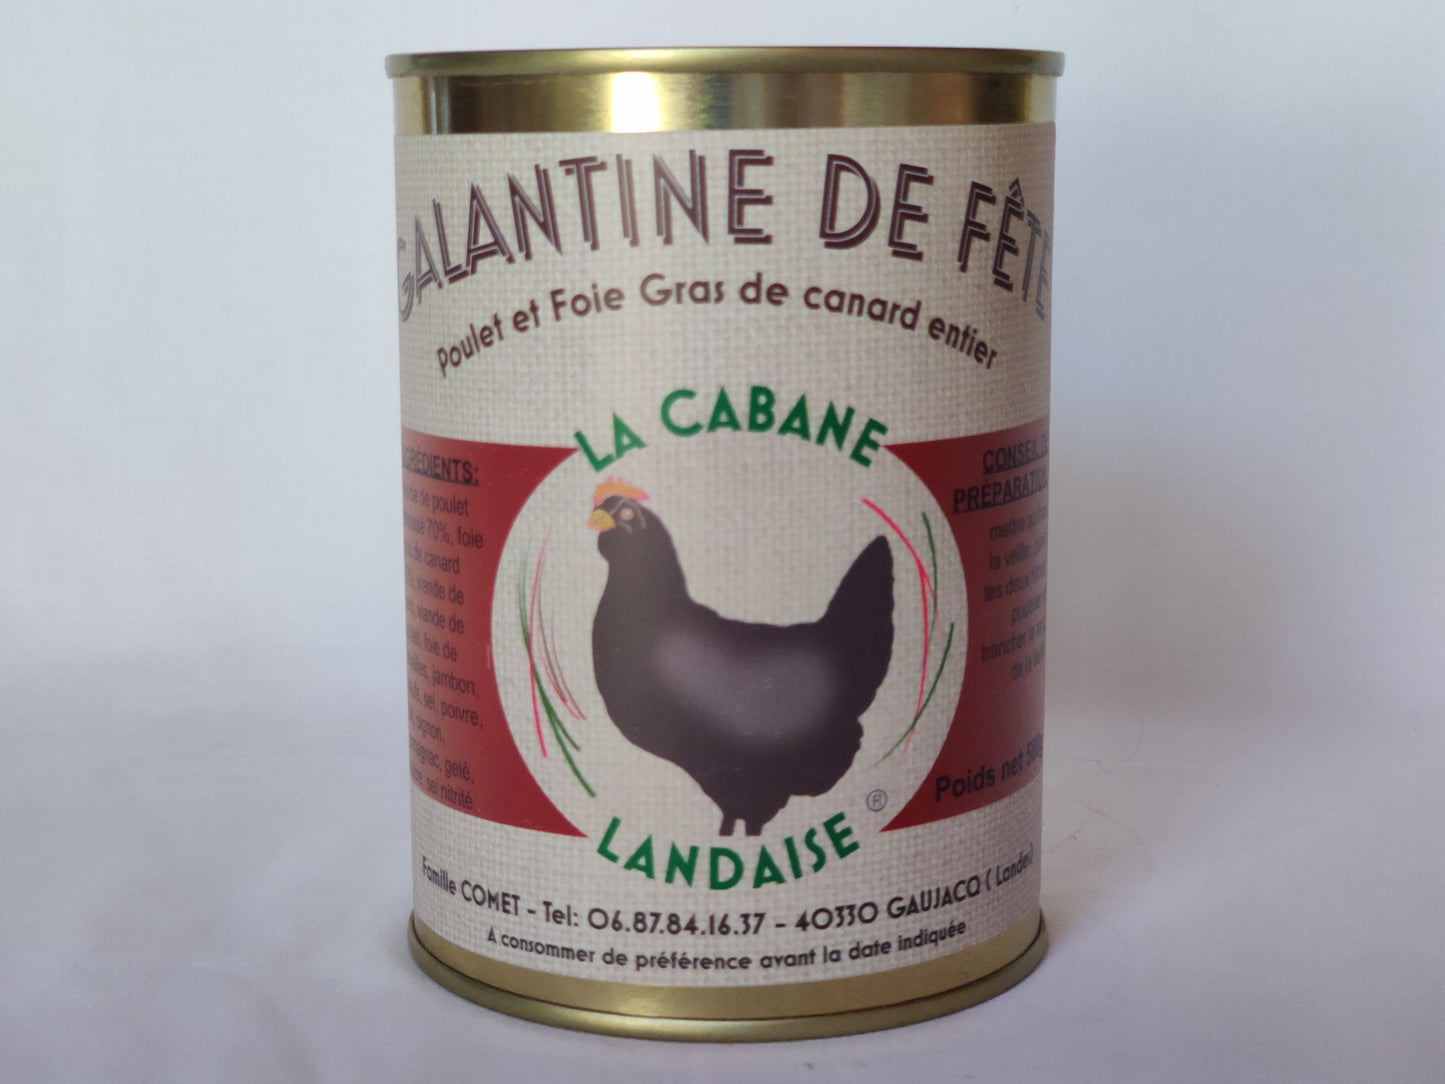 Galantine de fête au foie gras